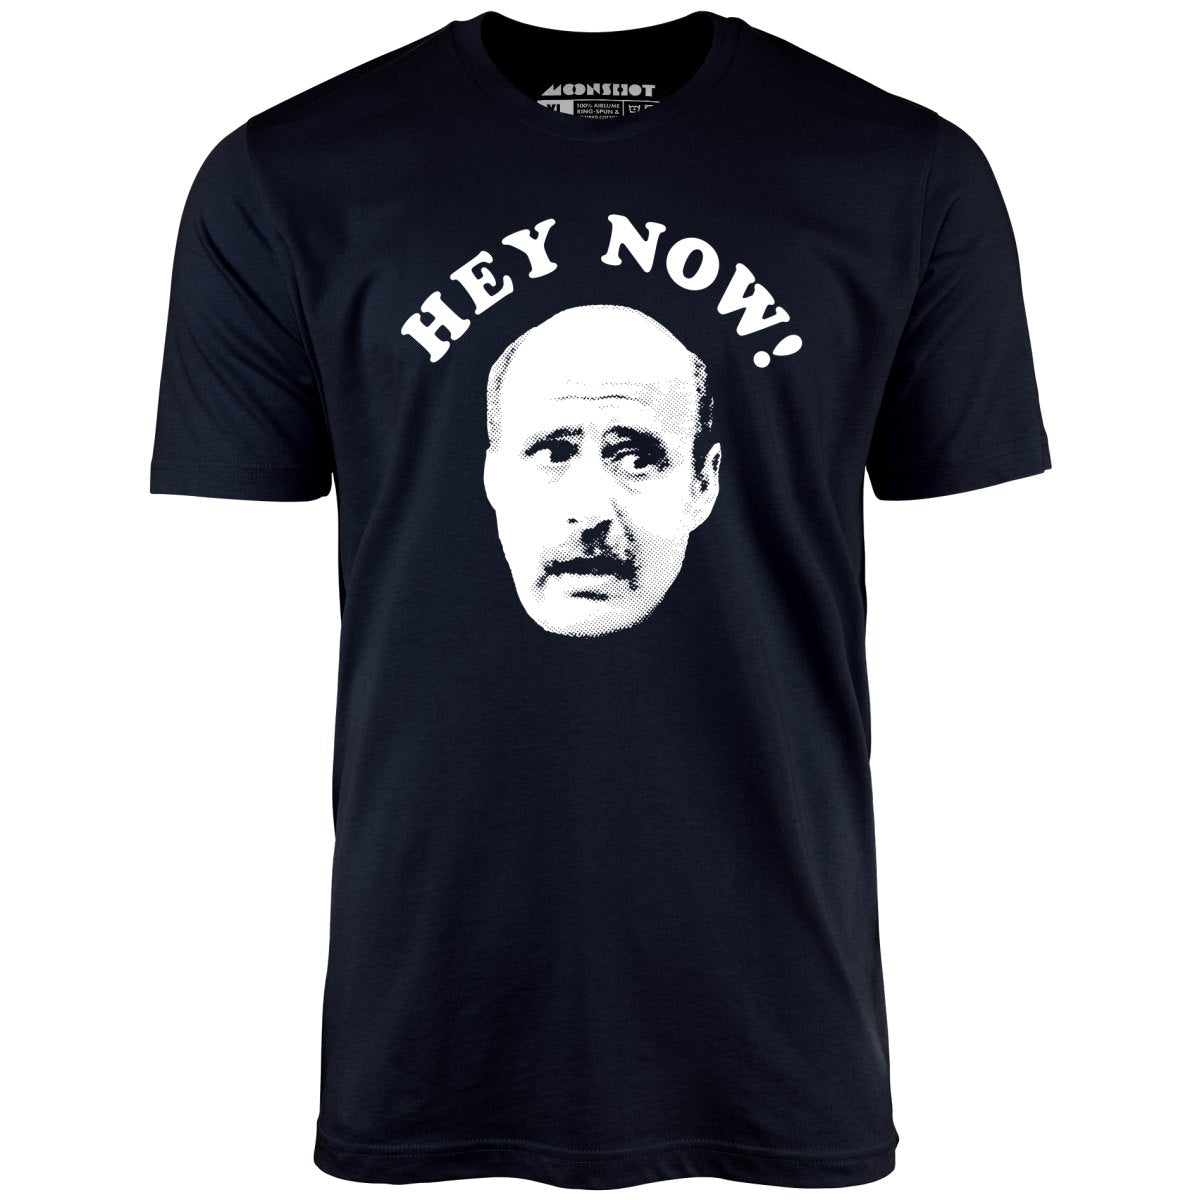 Hey Now - Hank Kingsley - Unisex T-Shirt